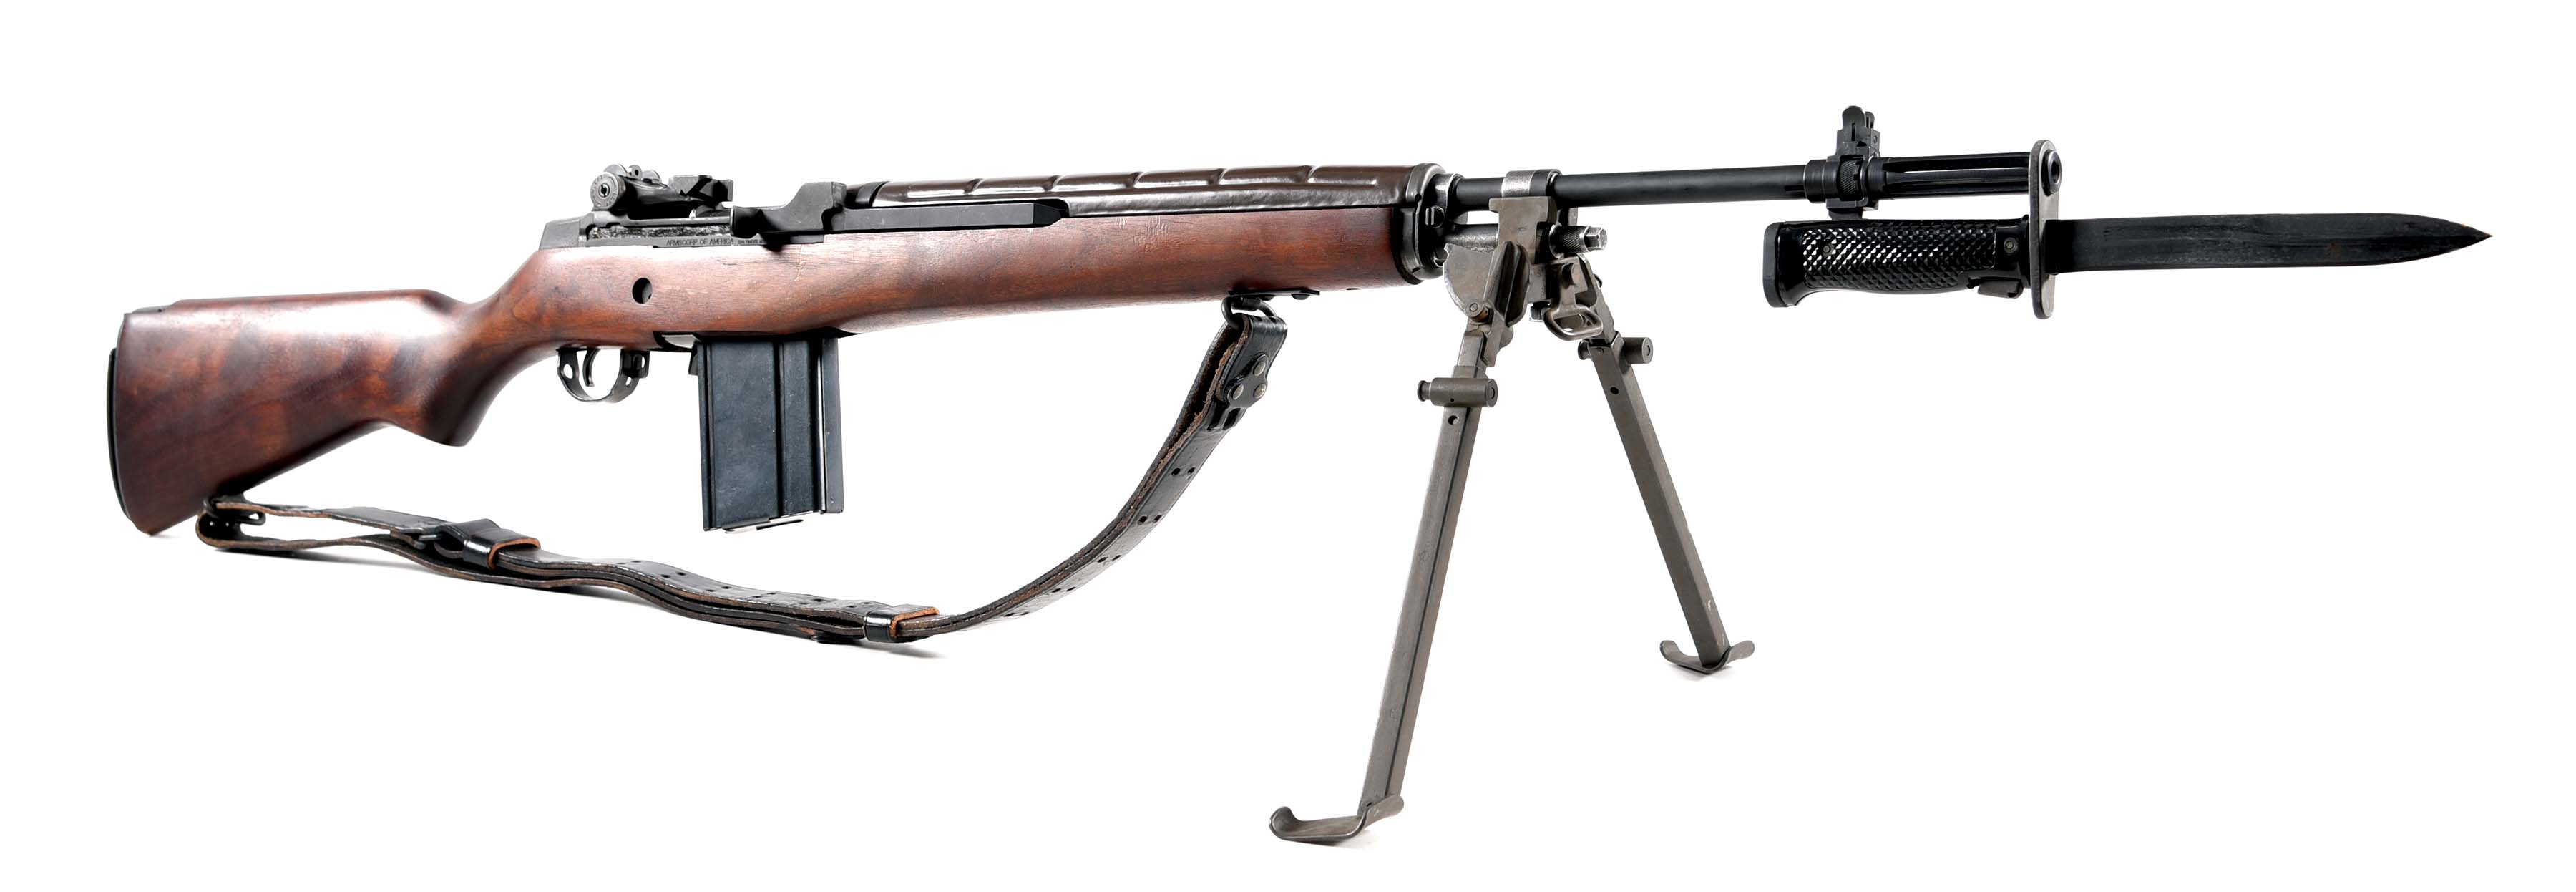 m14 rifle with bayonet